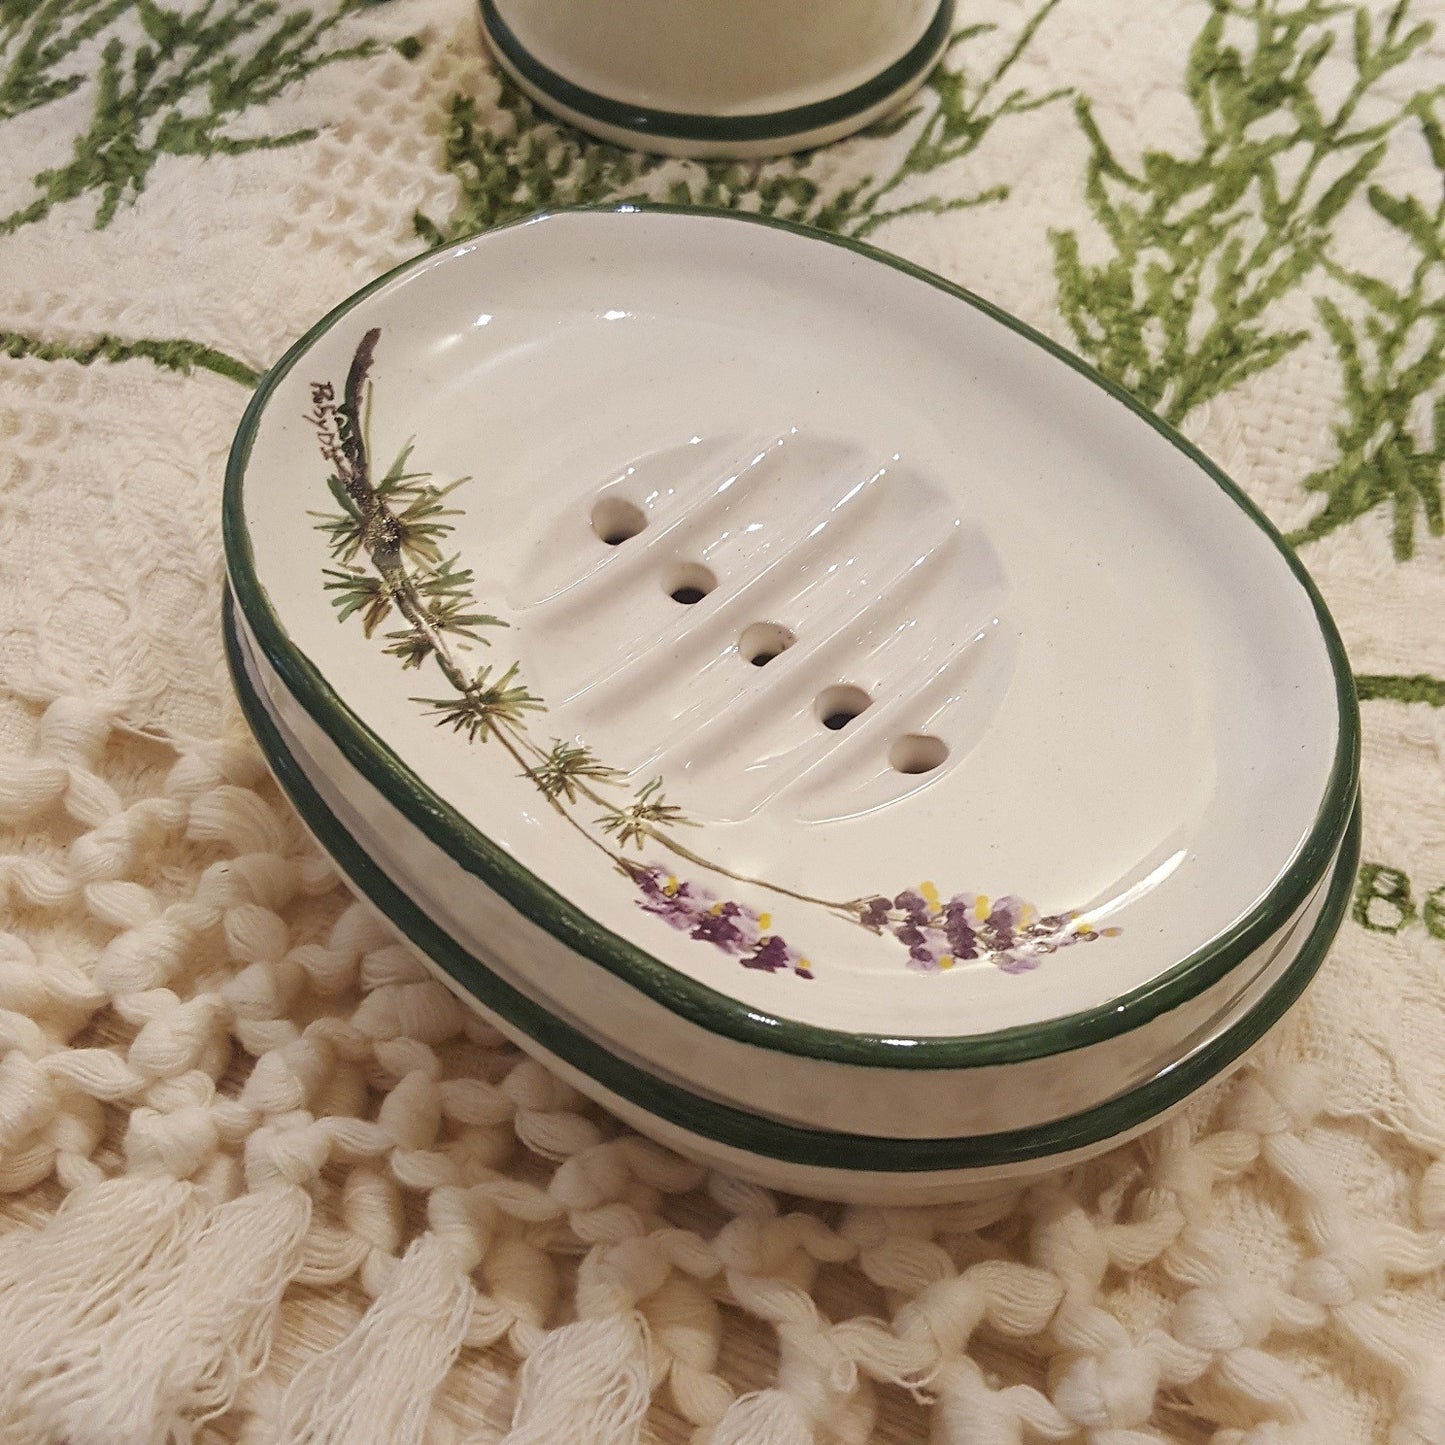 Lavanda Collection Ceramic Soap Dish